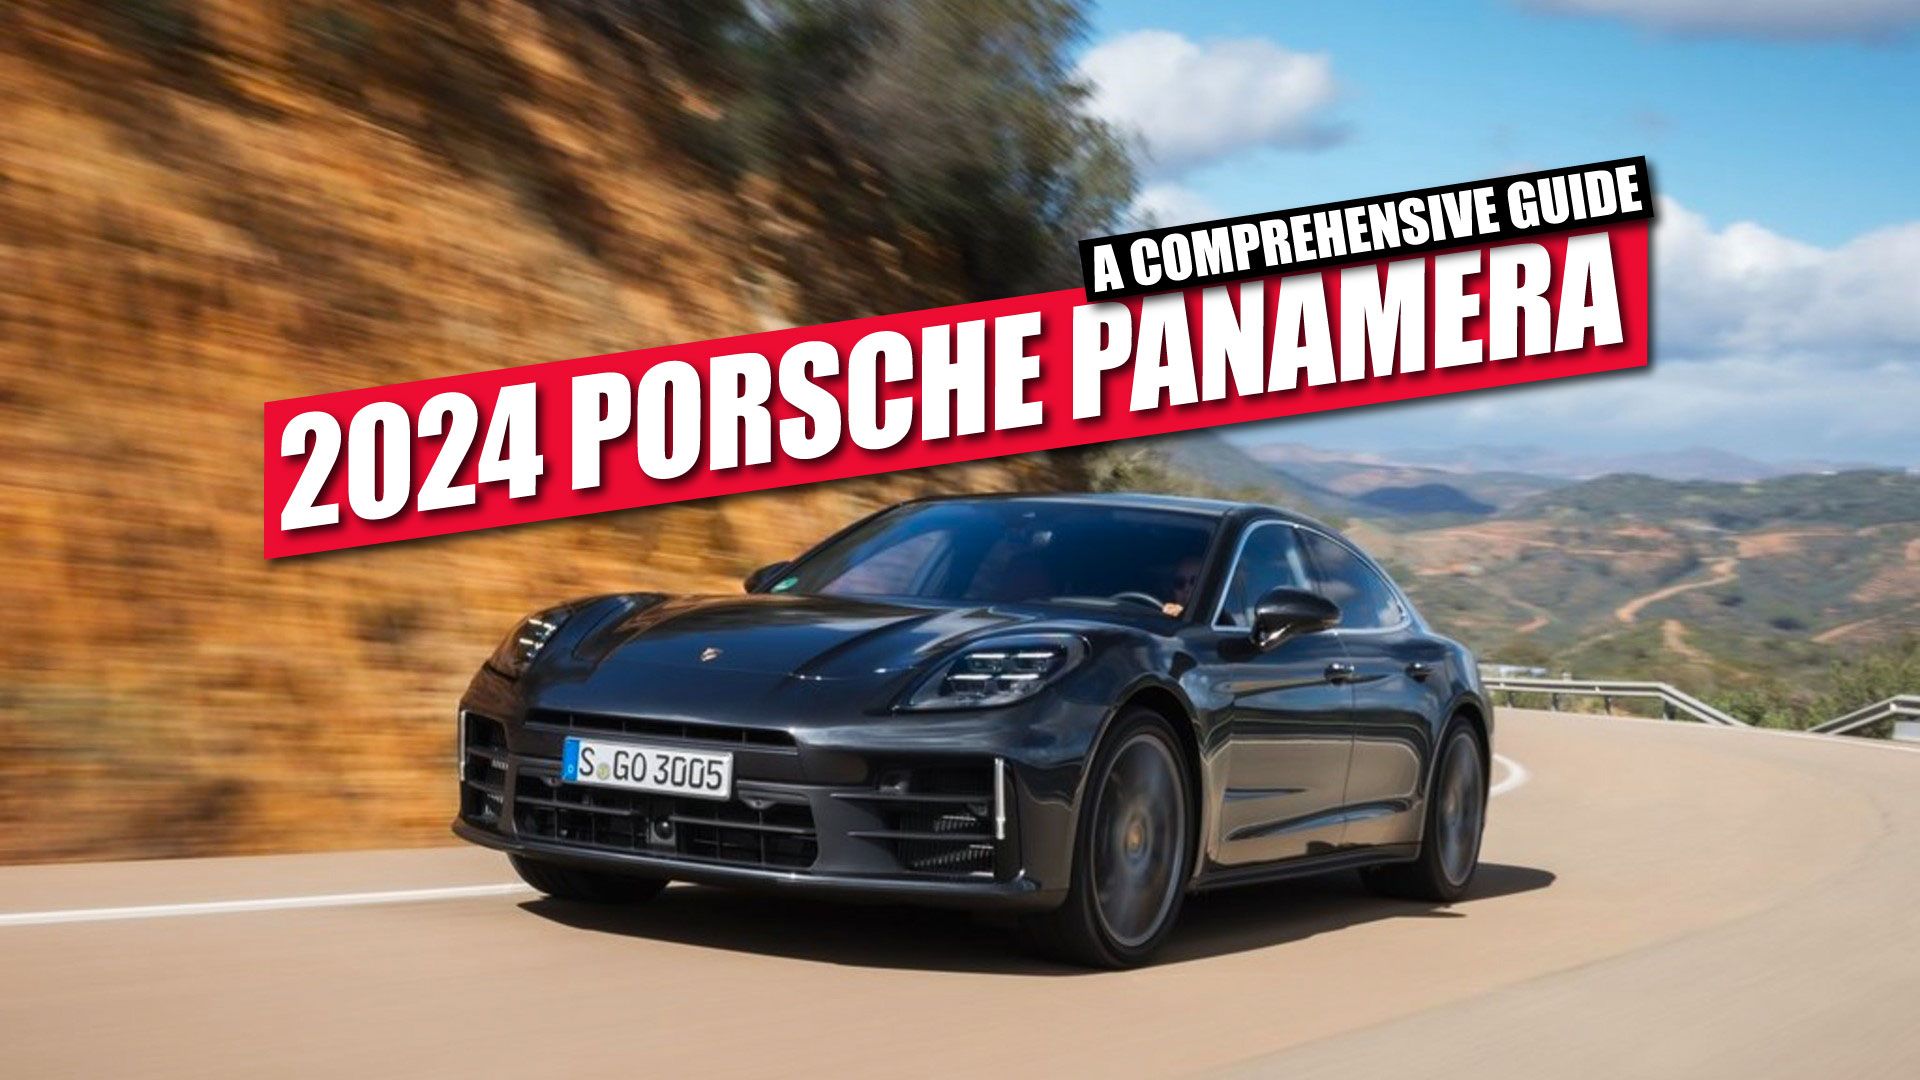 2024 Porsche Panamera feature image